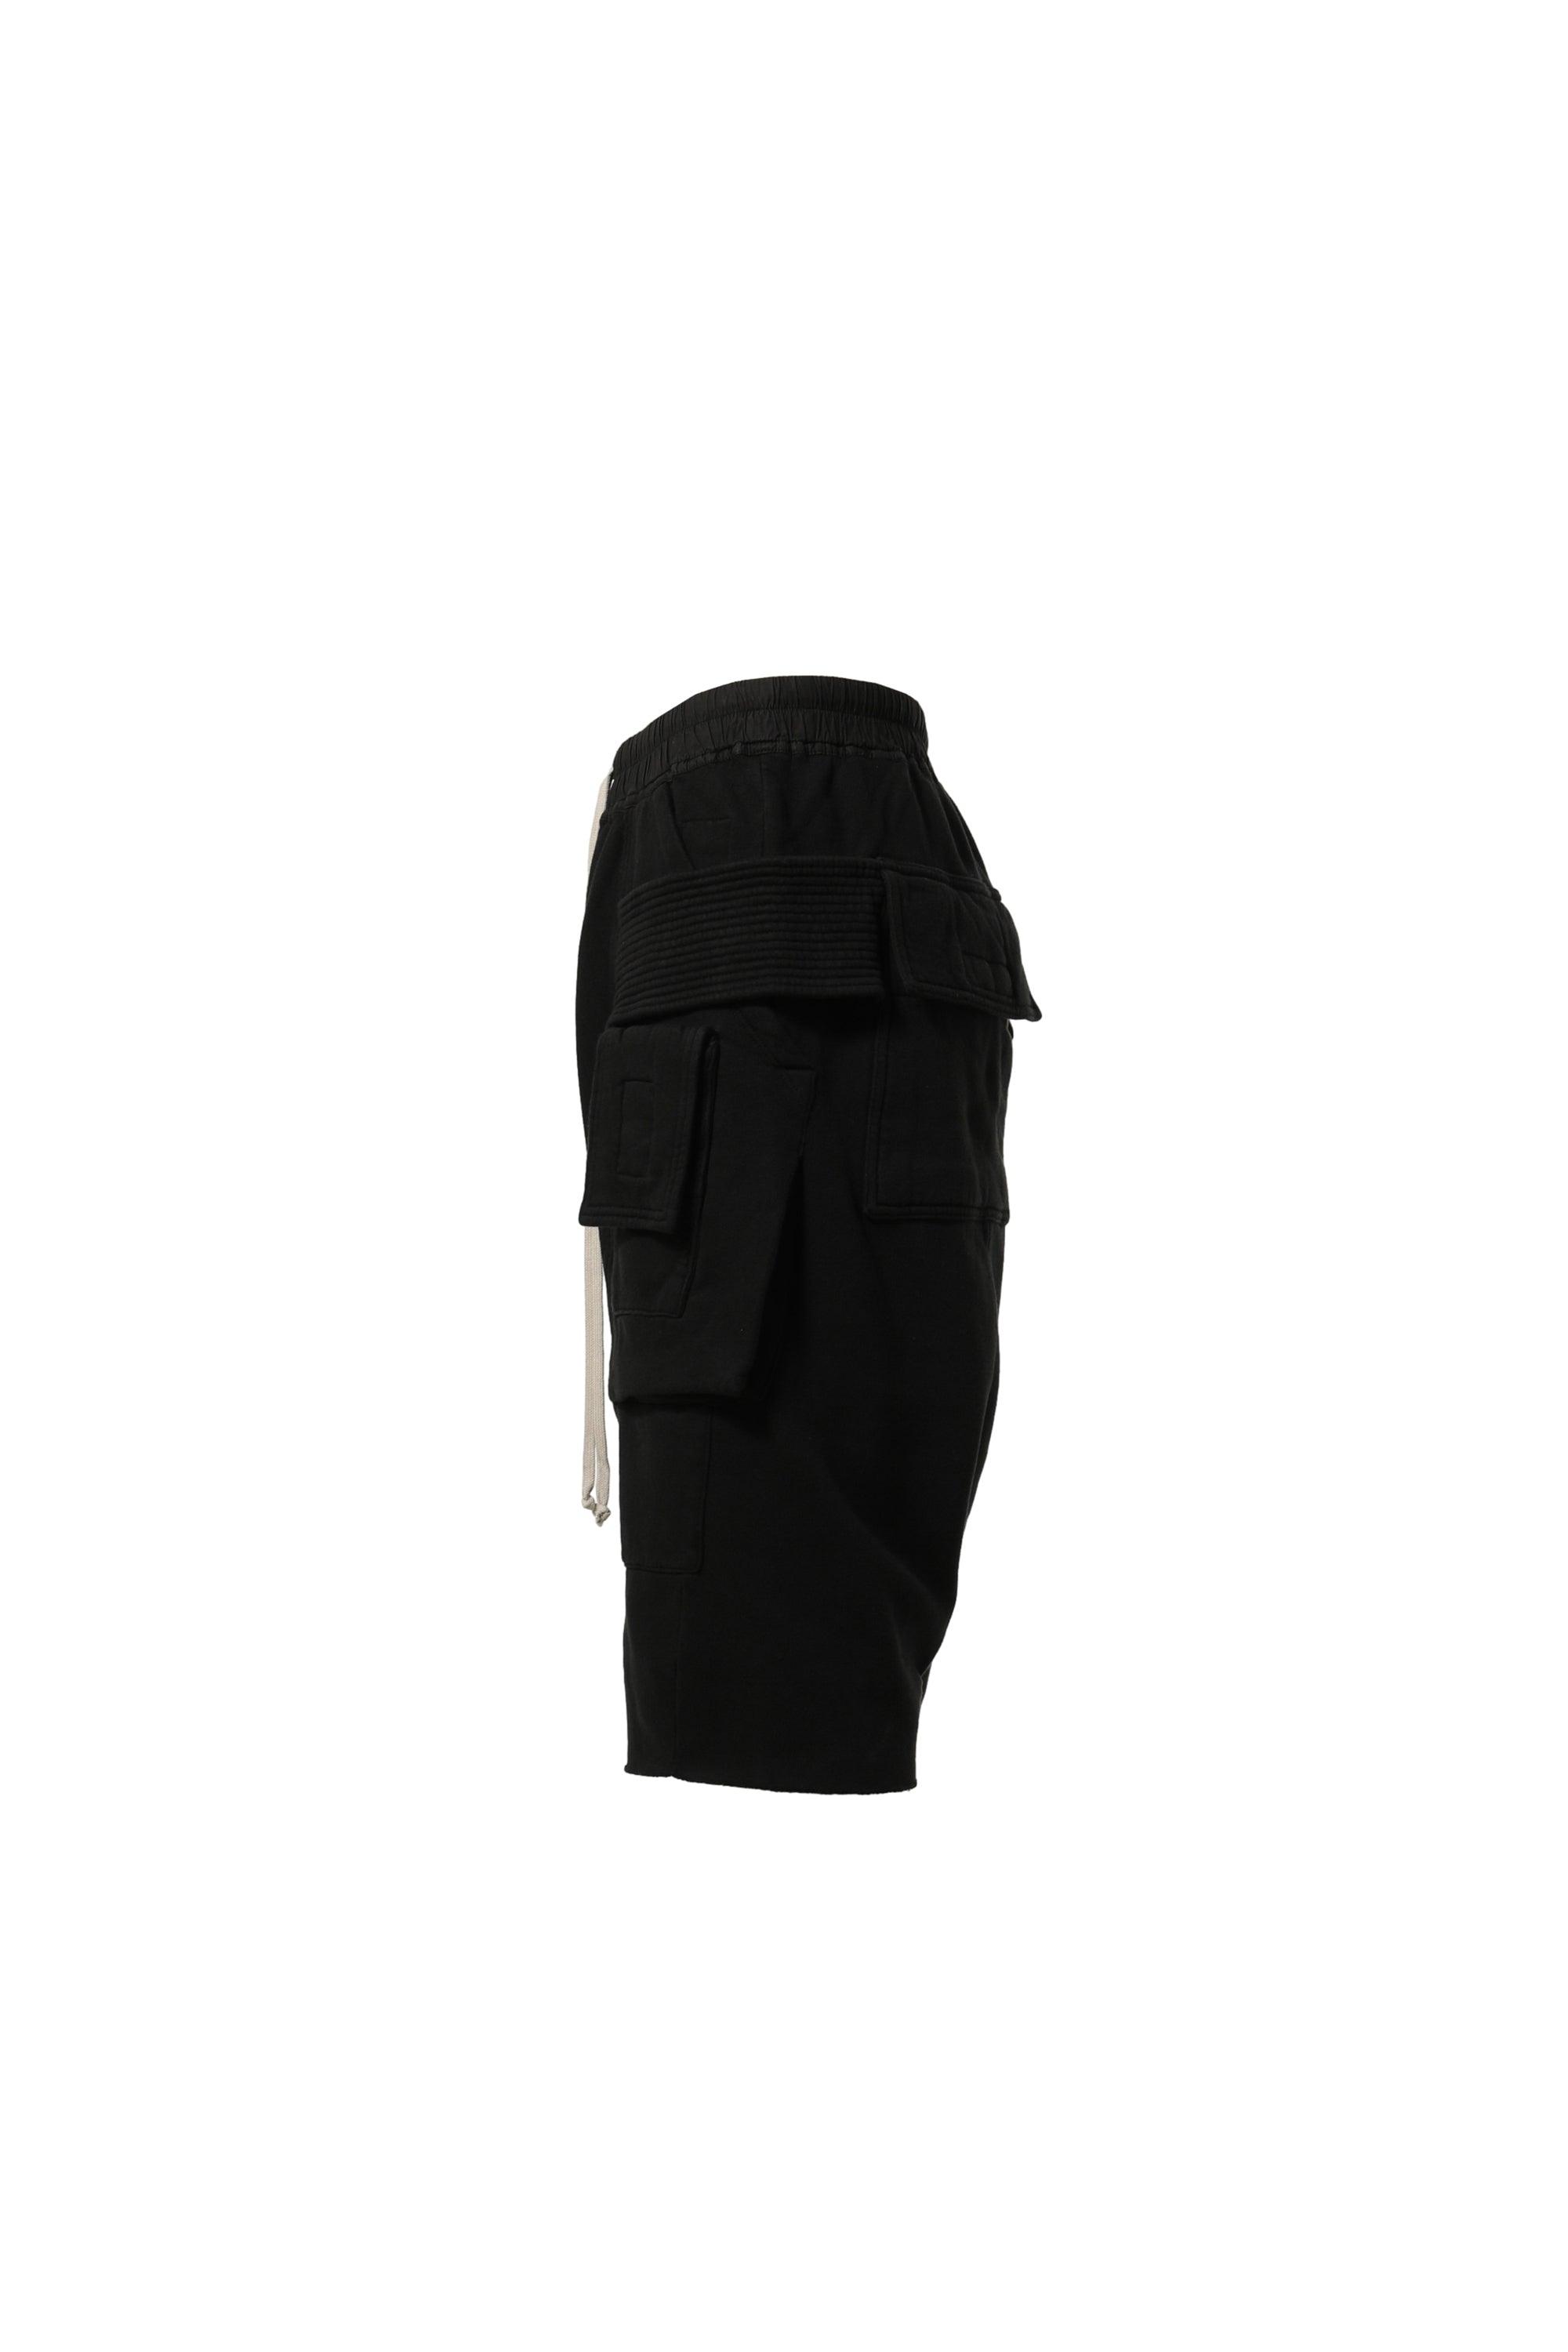 Rick Owens DRKSHDW Creatch Cargo Pods in Black for Men | Lyst